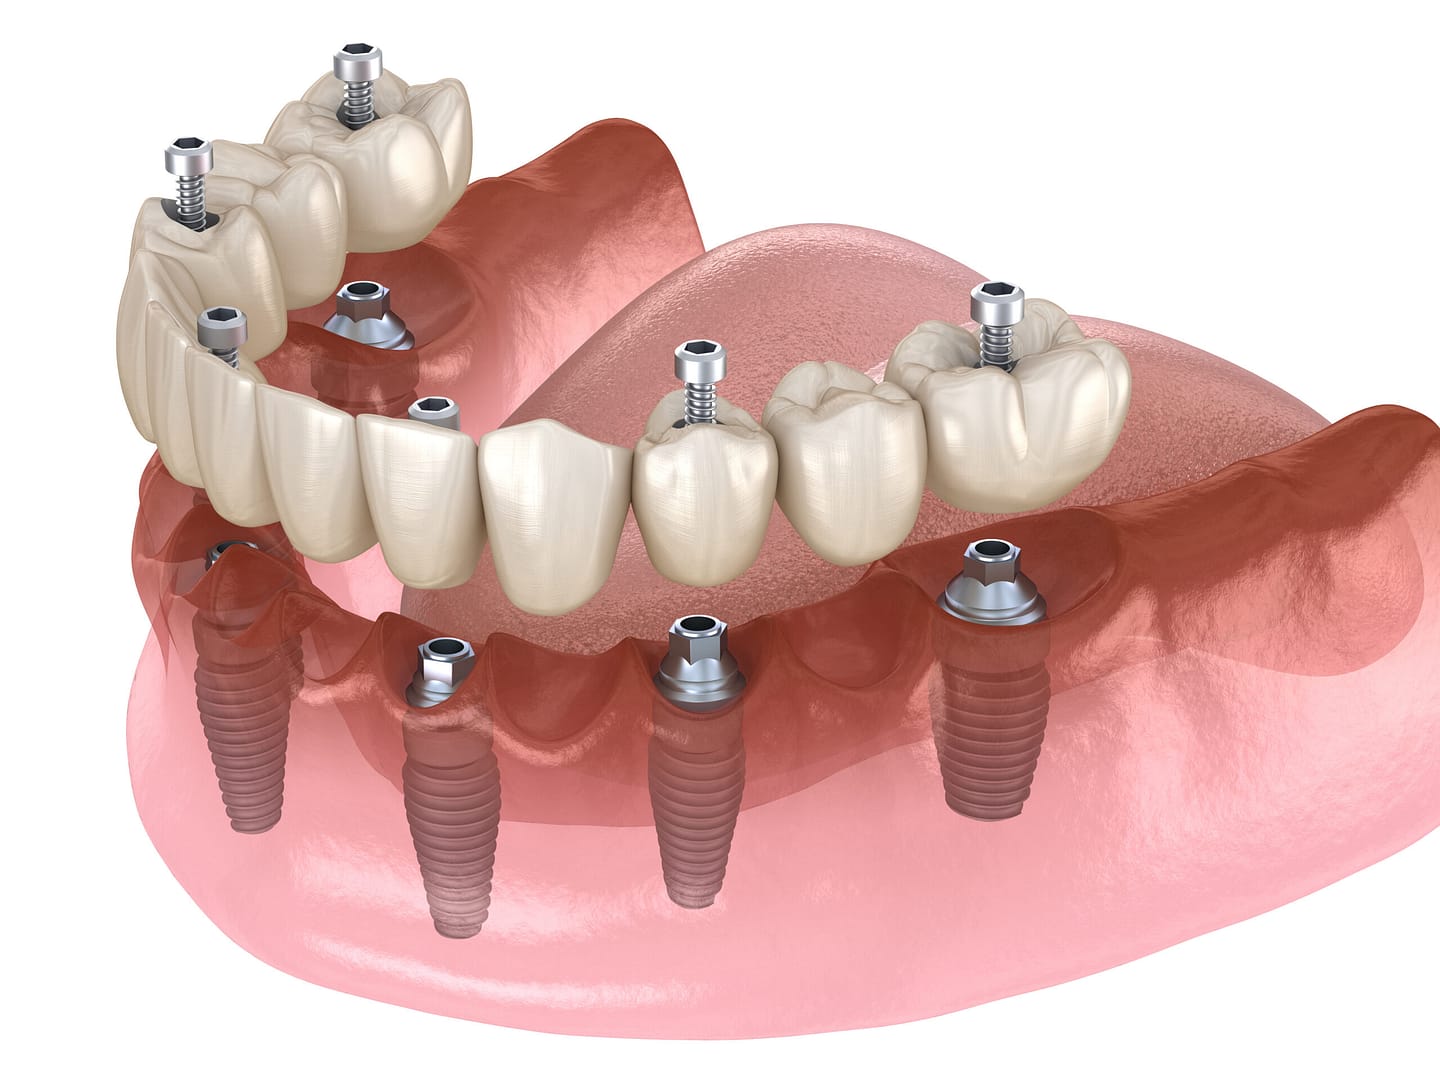 Fixed Implant Denture - Smile Science - Glendale, AZ